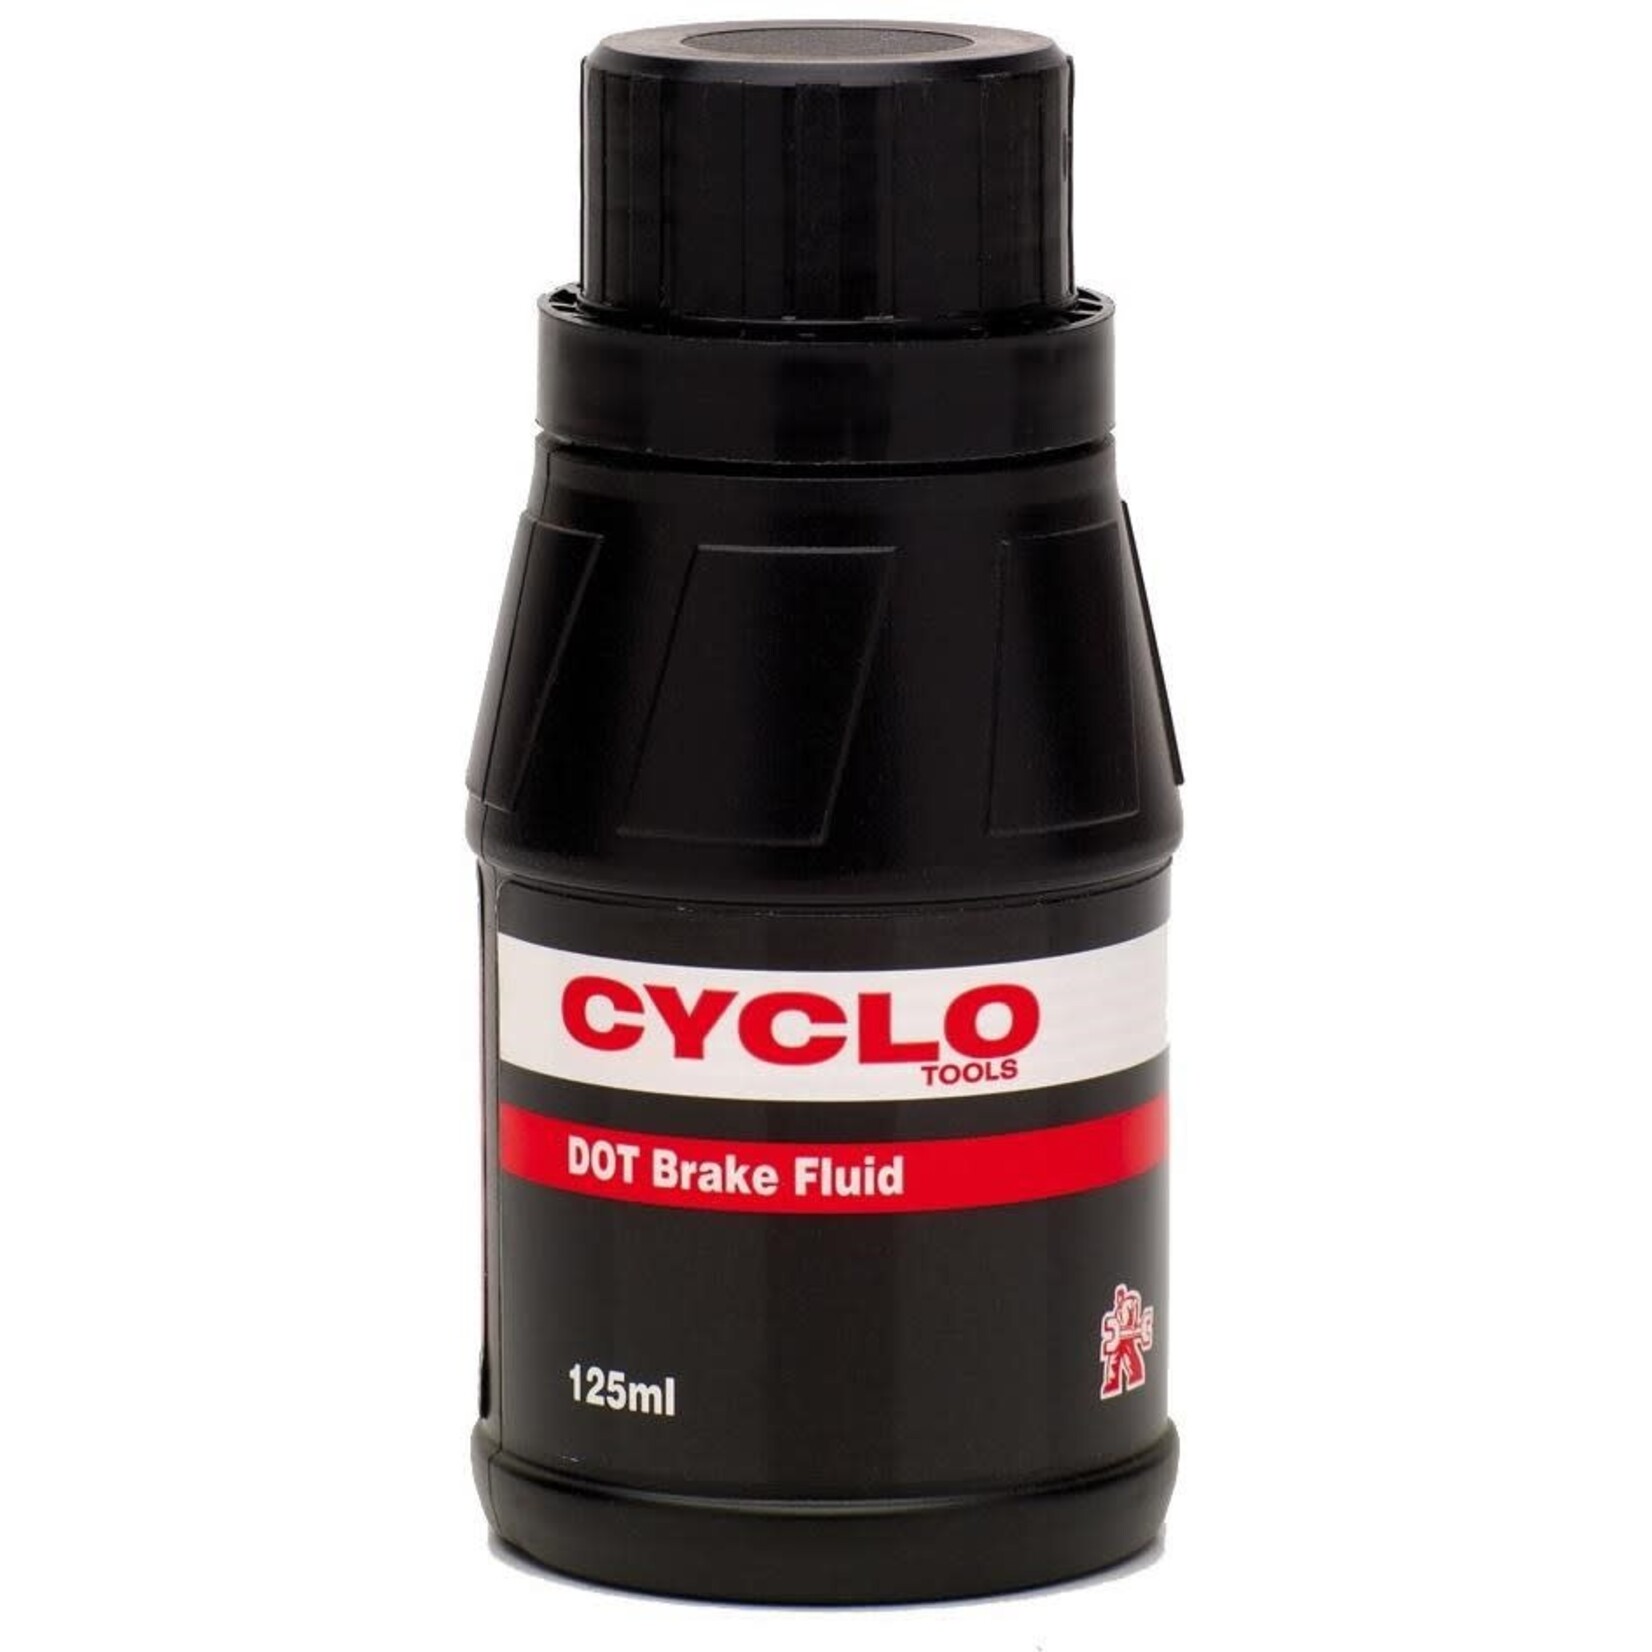 WELDTITE Cyclo Dot Brake Fluid (125ml)